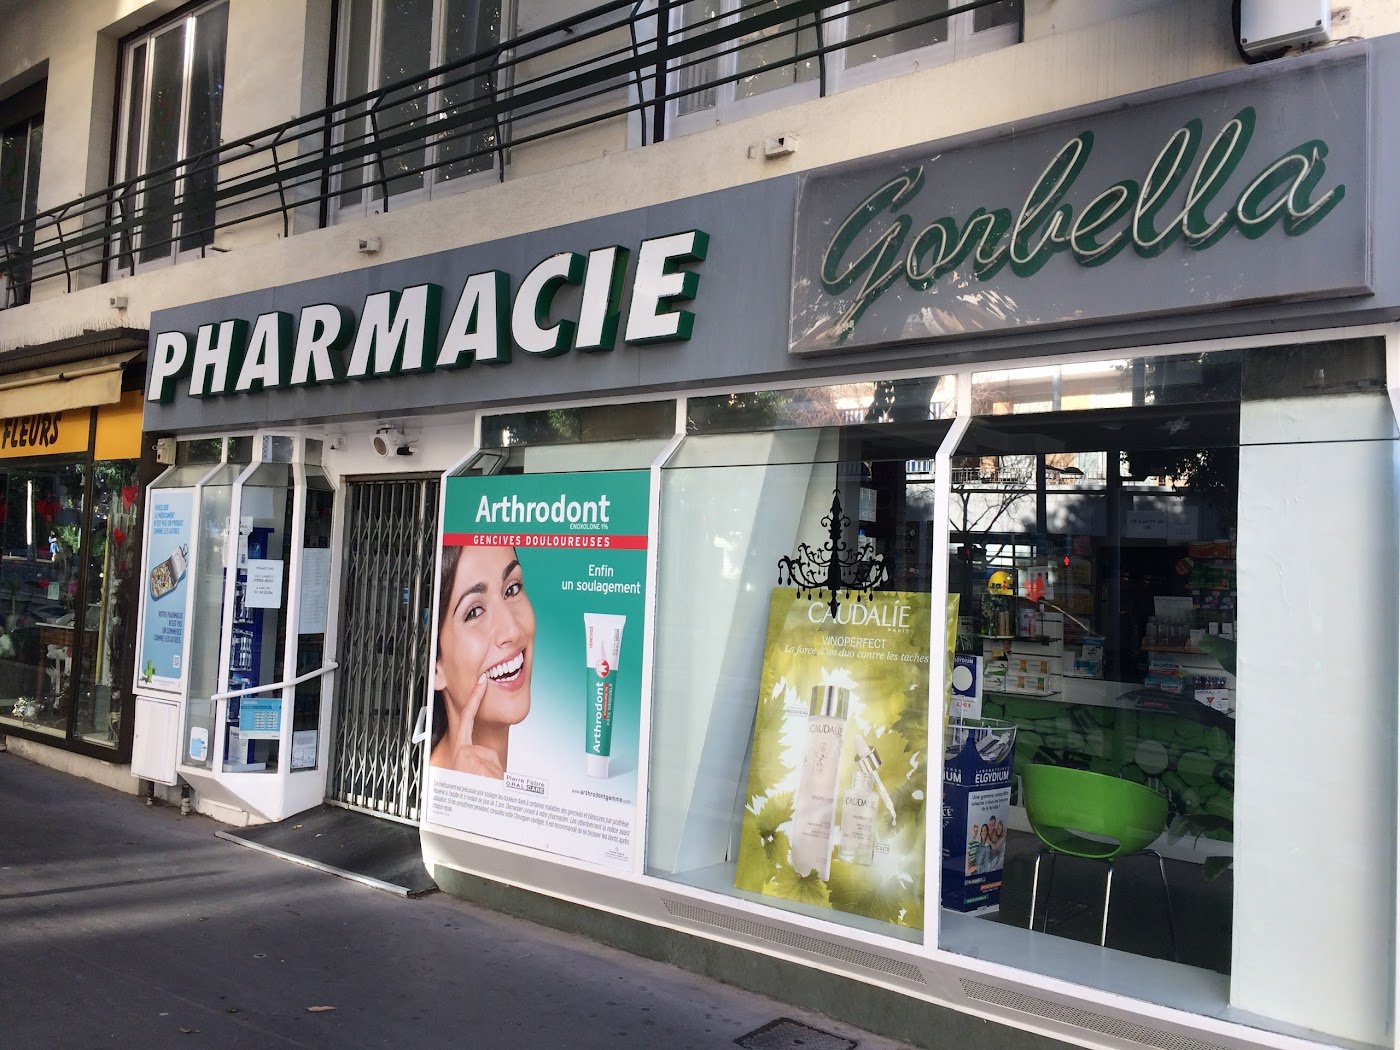 Pharmacie Gorbella 💊 Totum